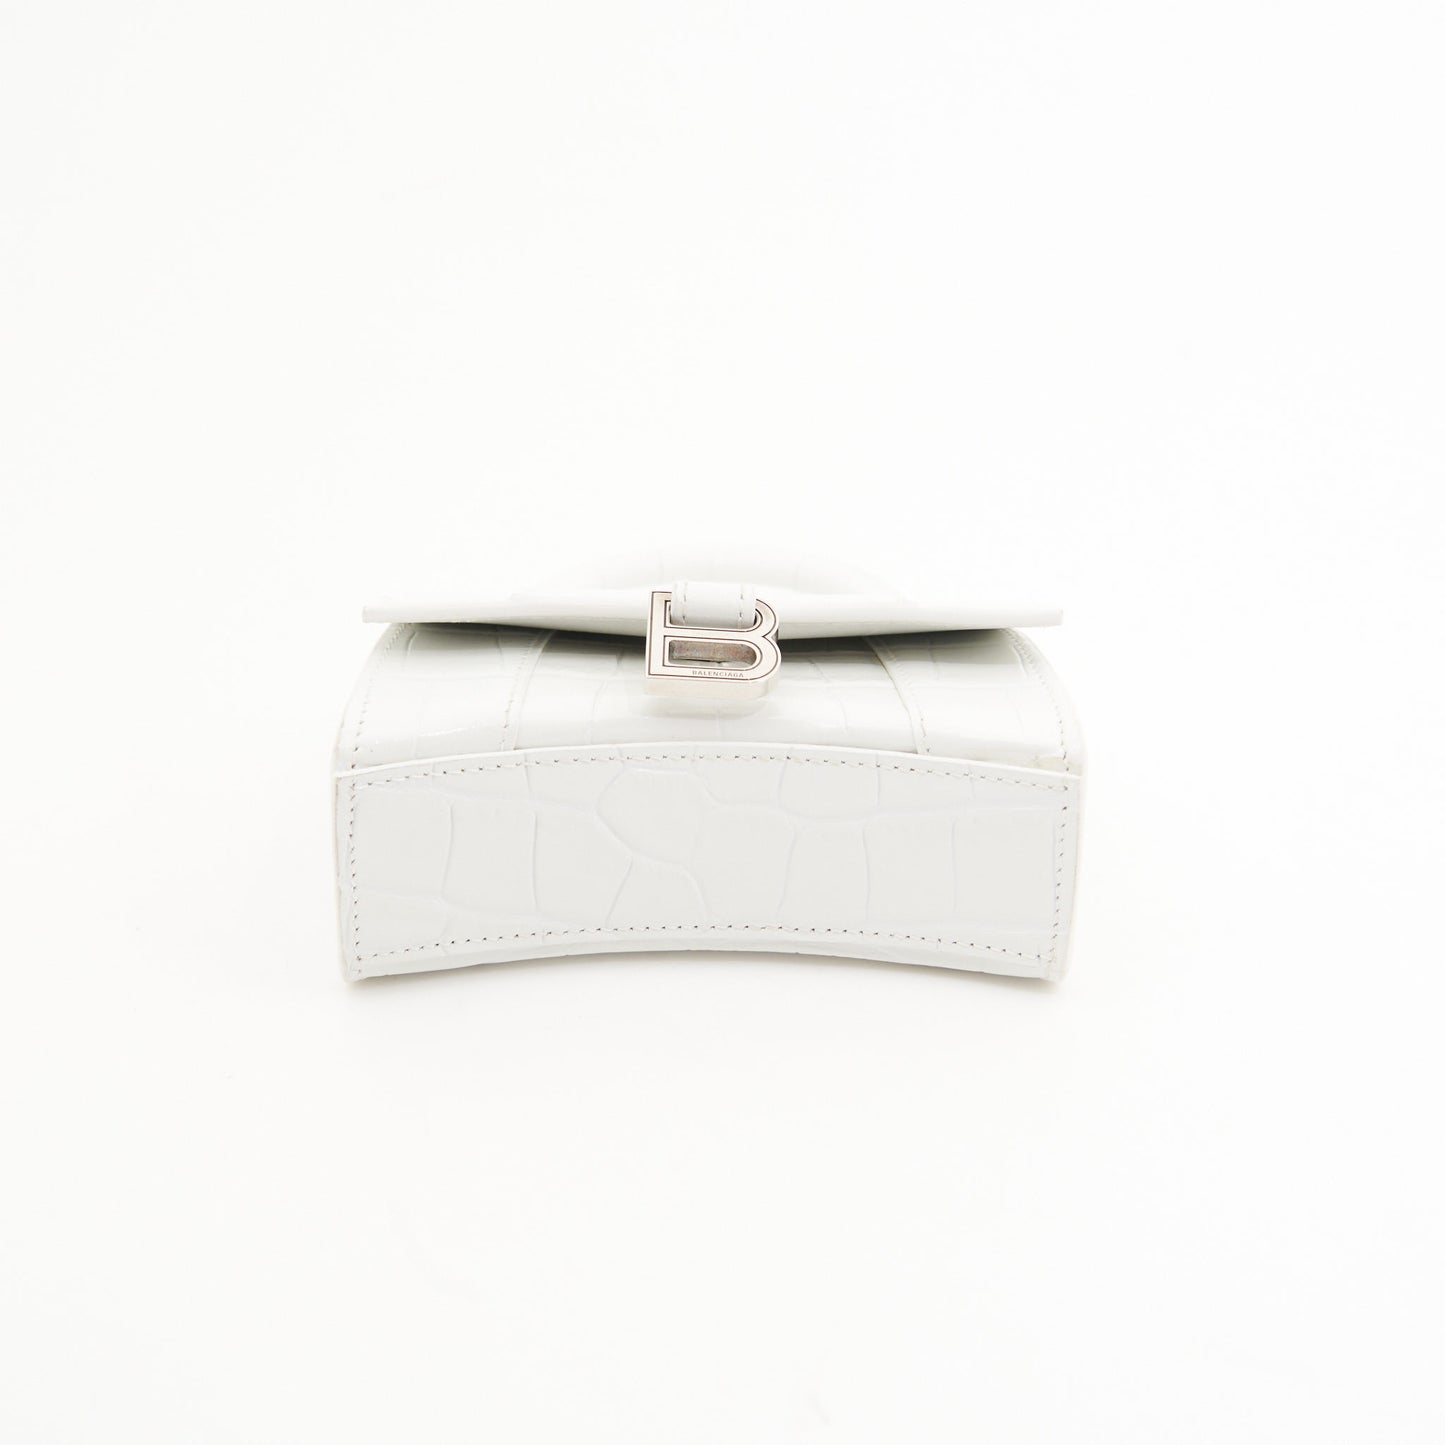 Balenciaga Super Mini Hourglass Bag in White Croc